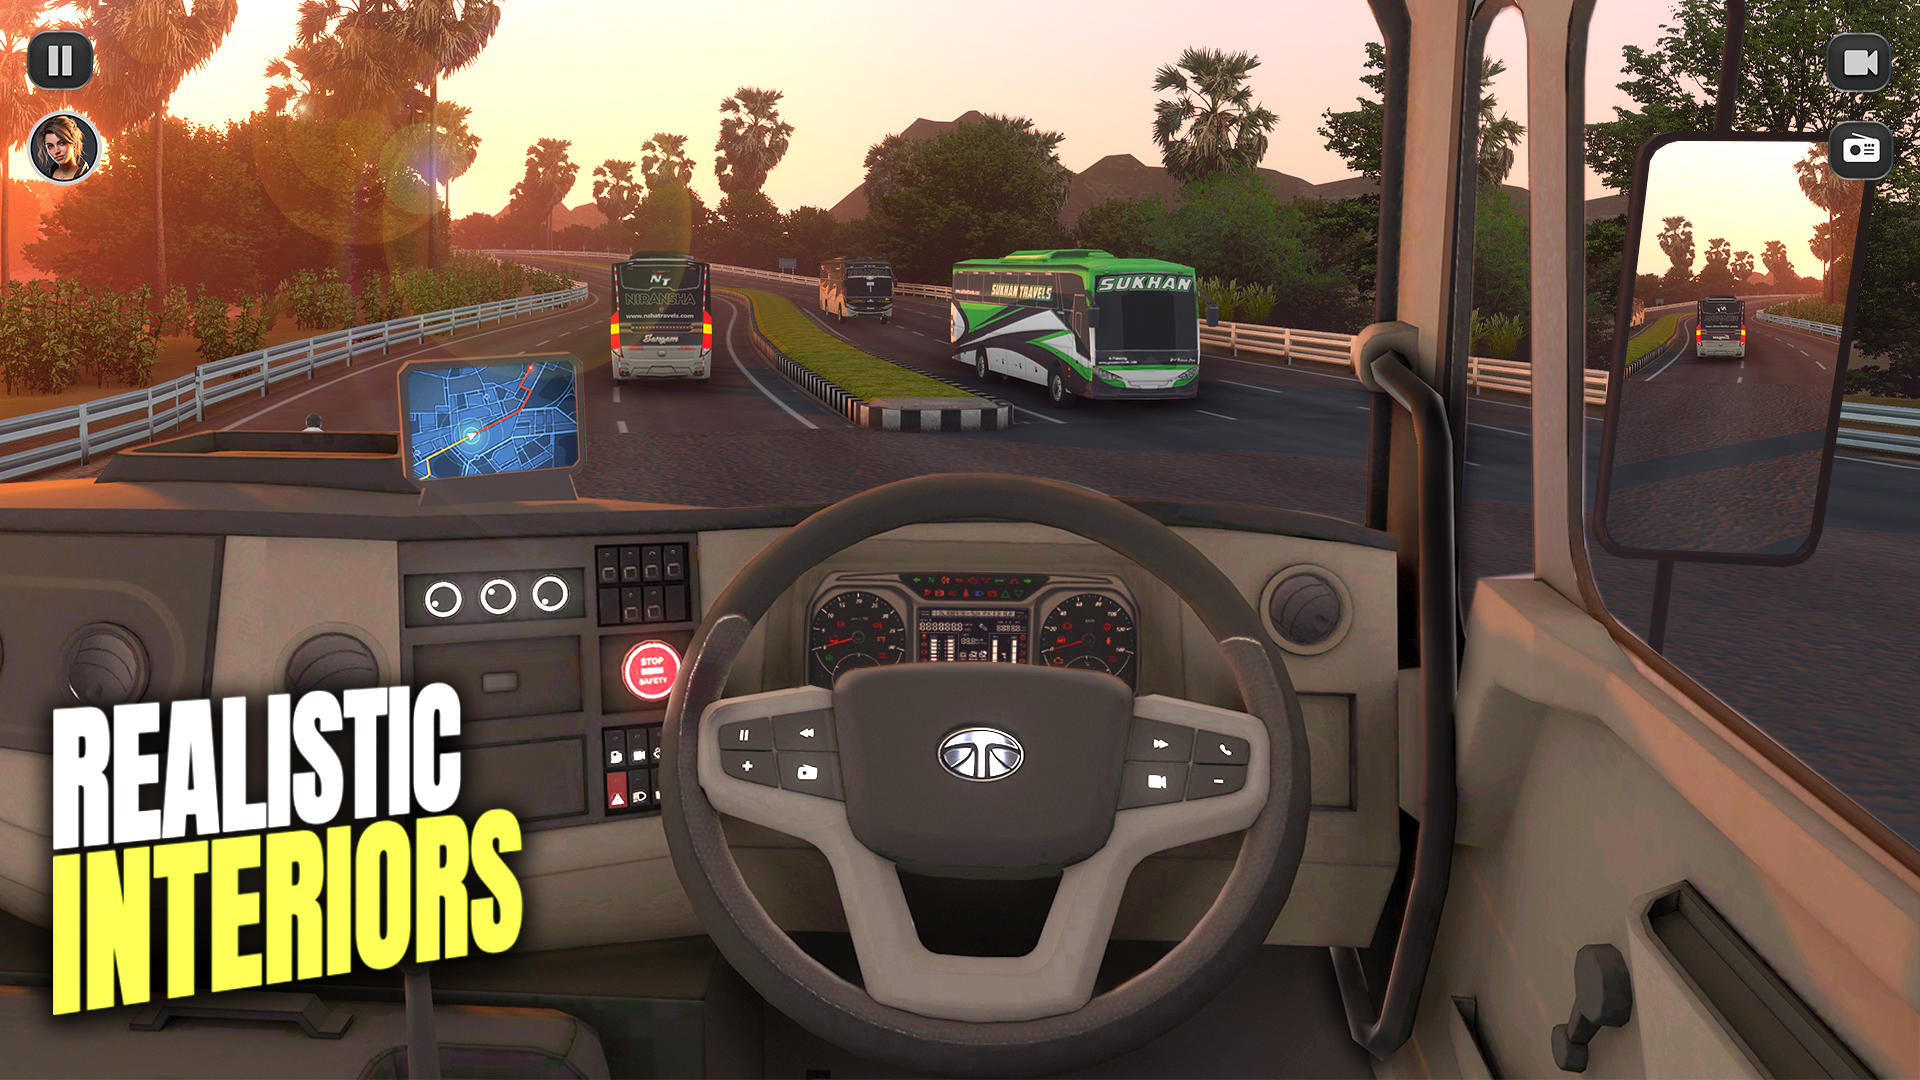 Truck Masters: India Simulatorのキャプチャ